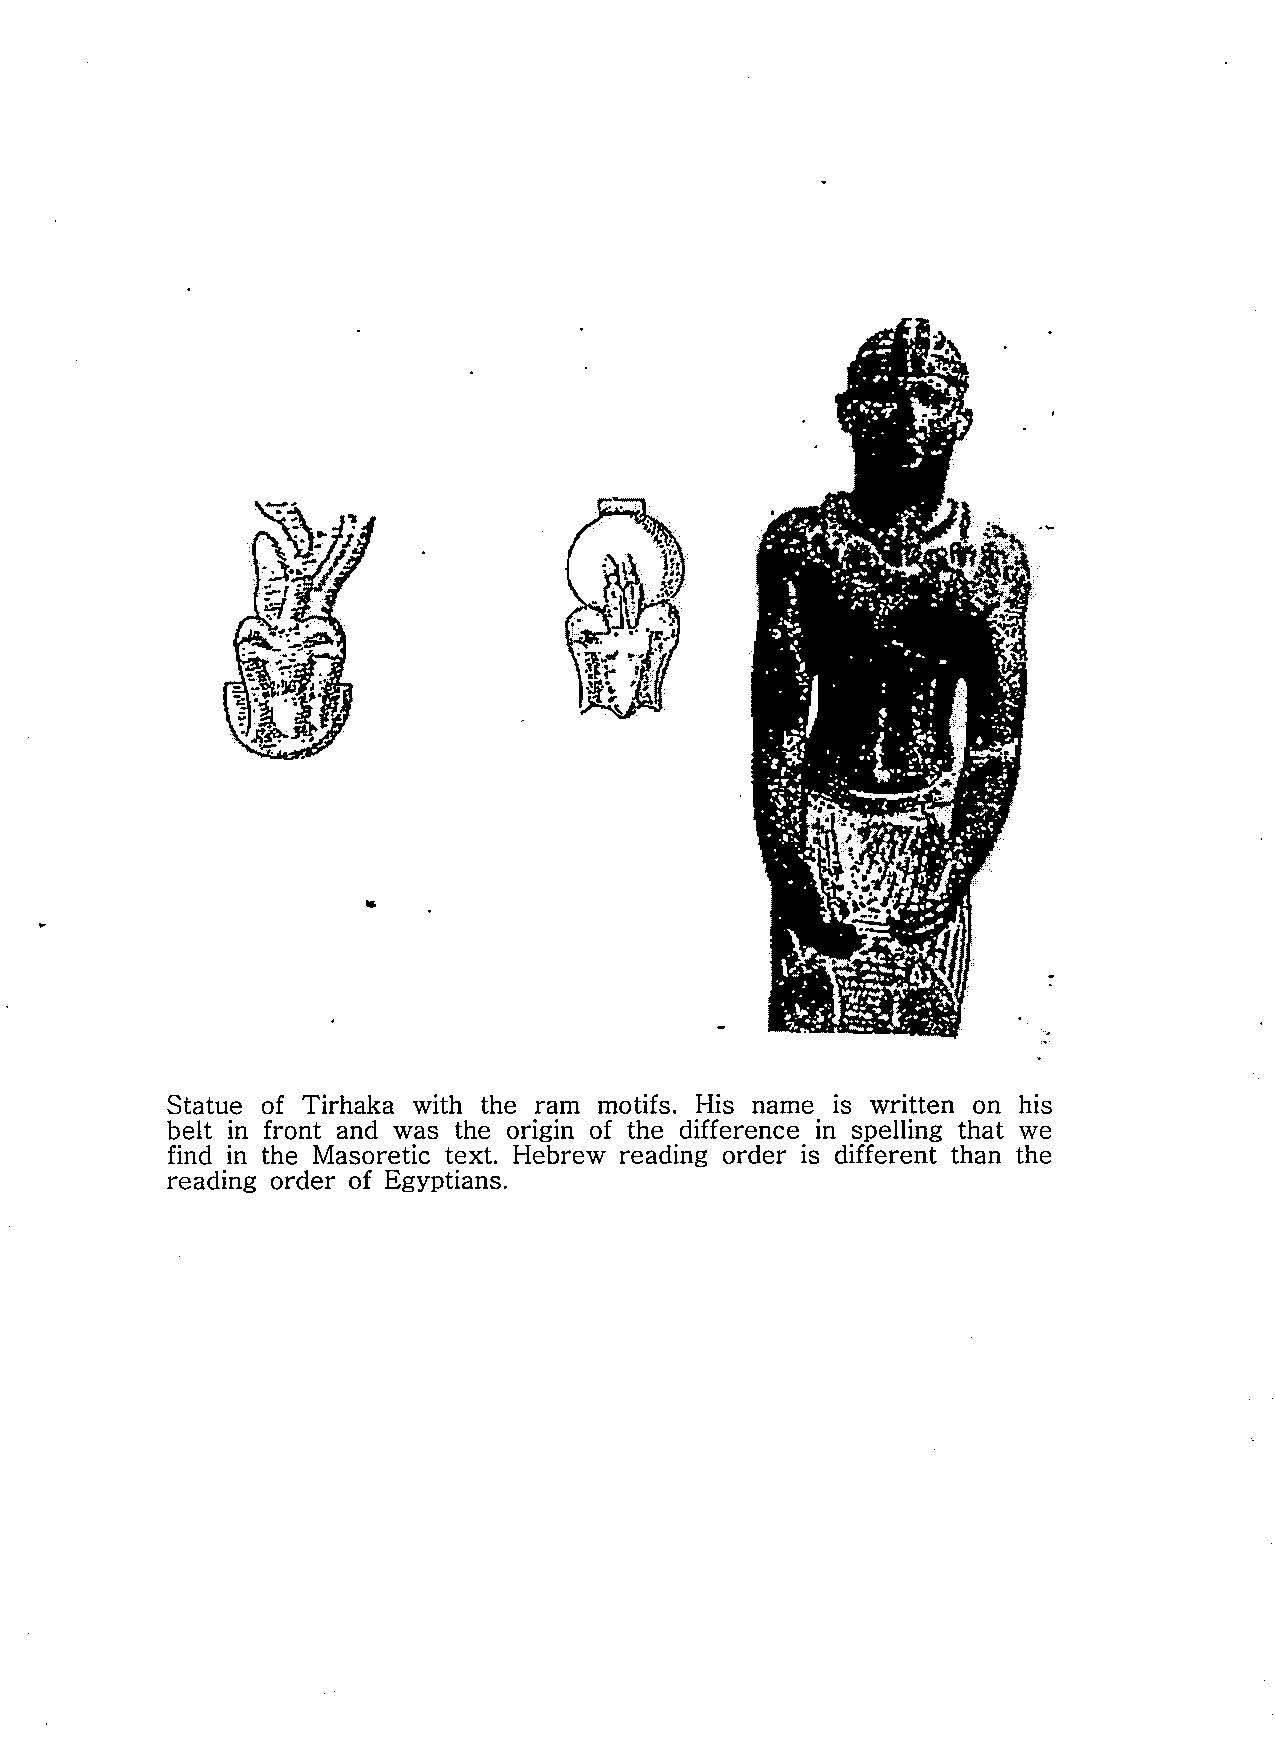 Ram motif on Rhytons of Persian period7b8.jpg